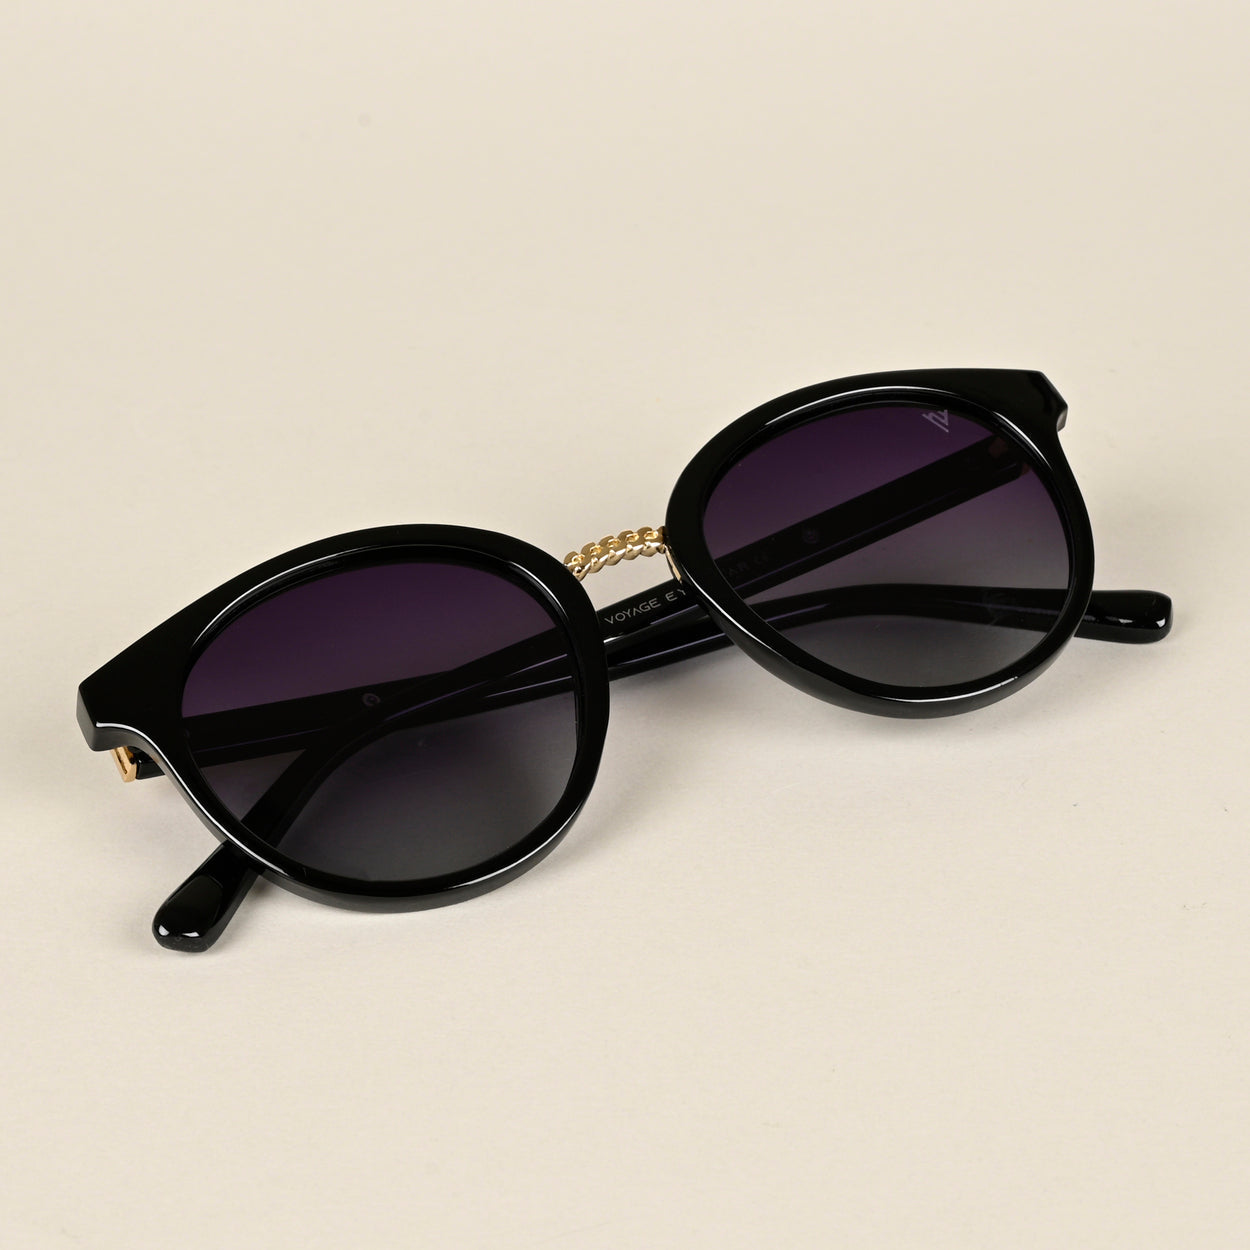 Women's purple polarized sunglasses tortoise glasses purple gradient  sunglass S | eBay